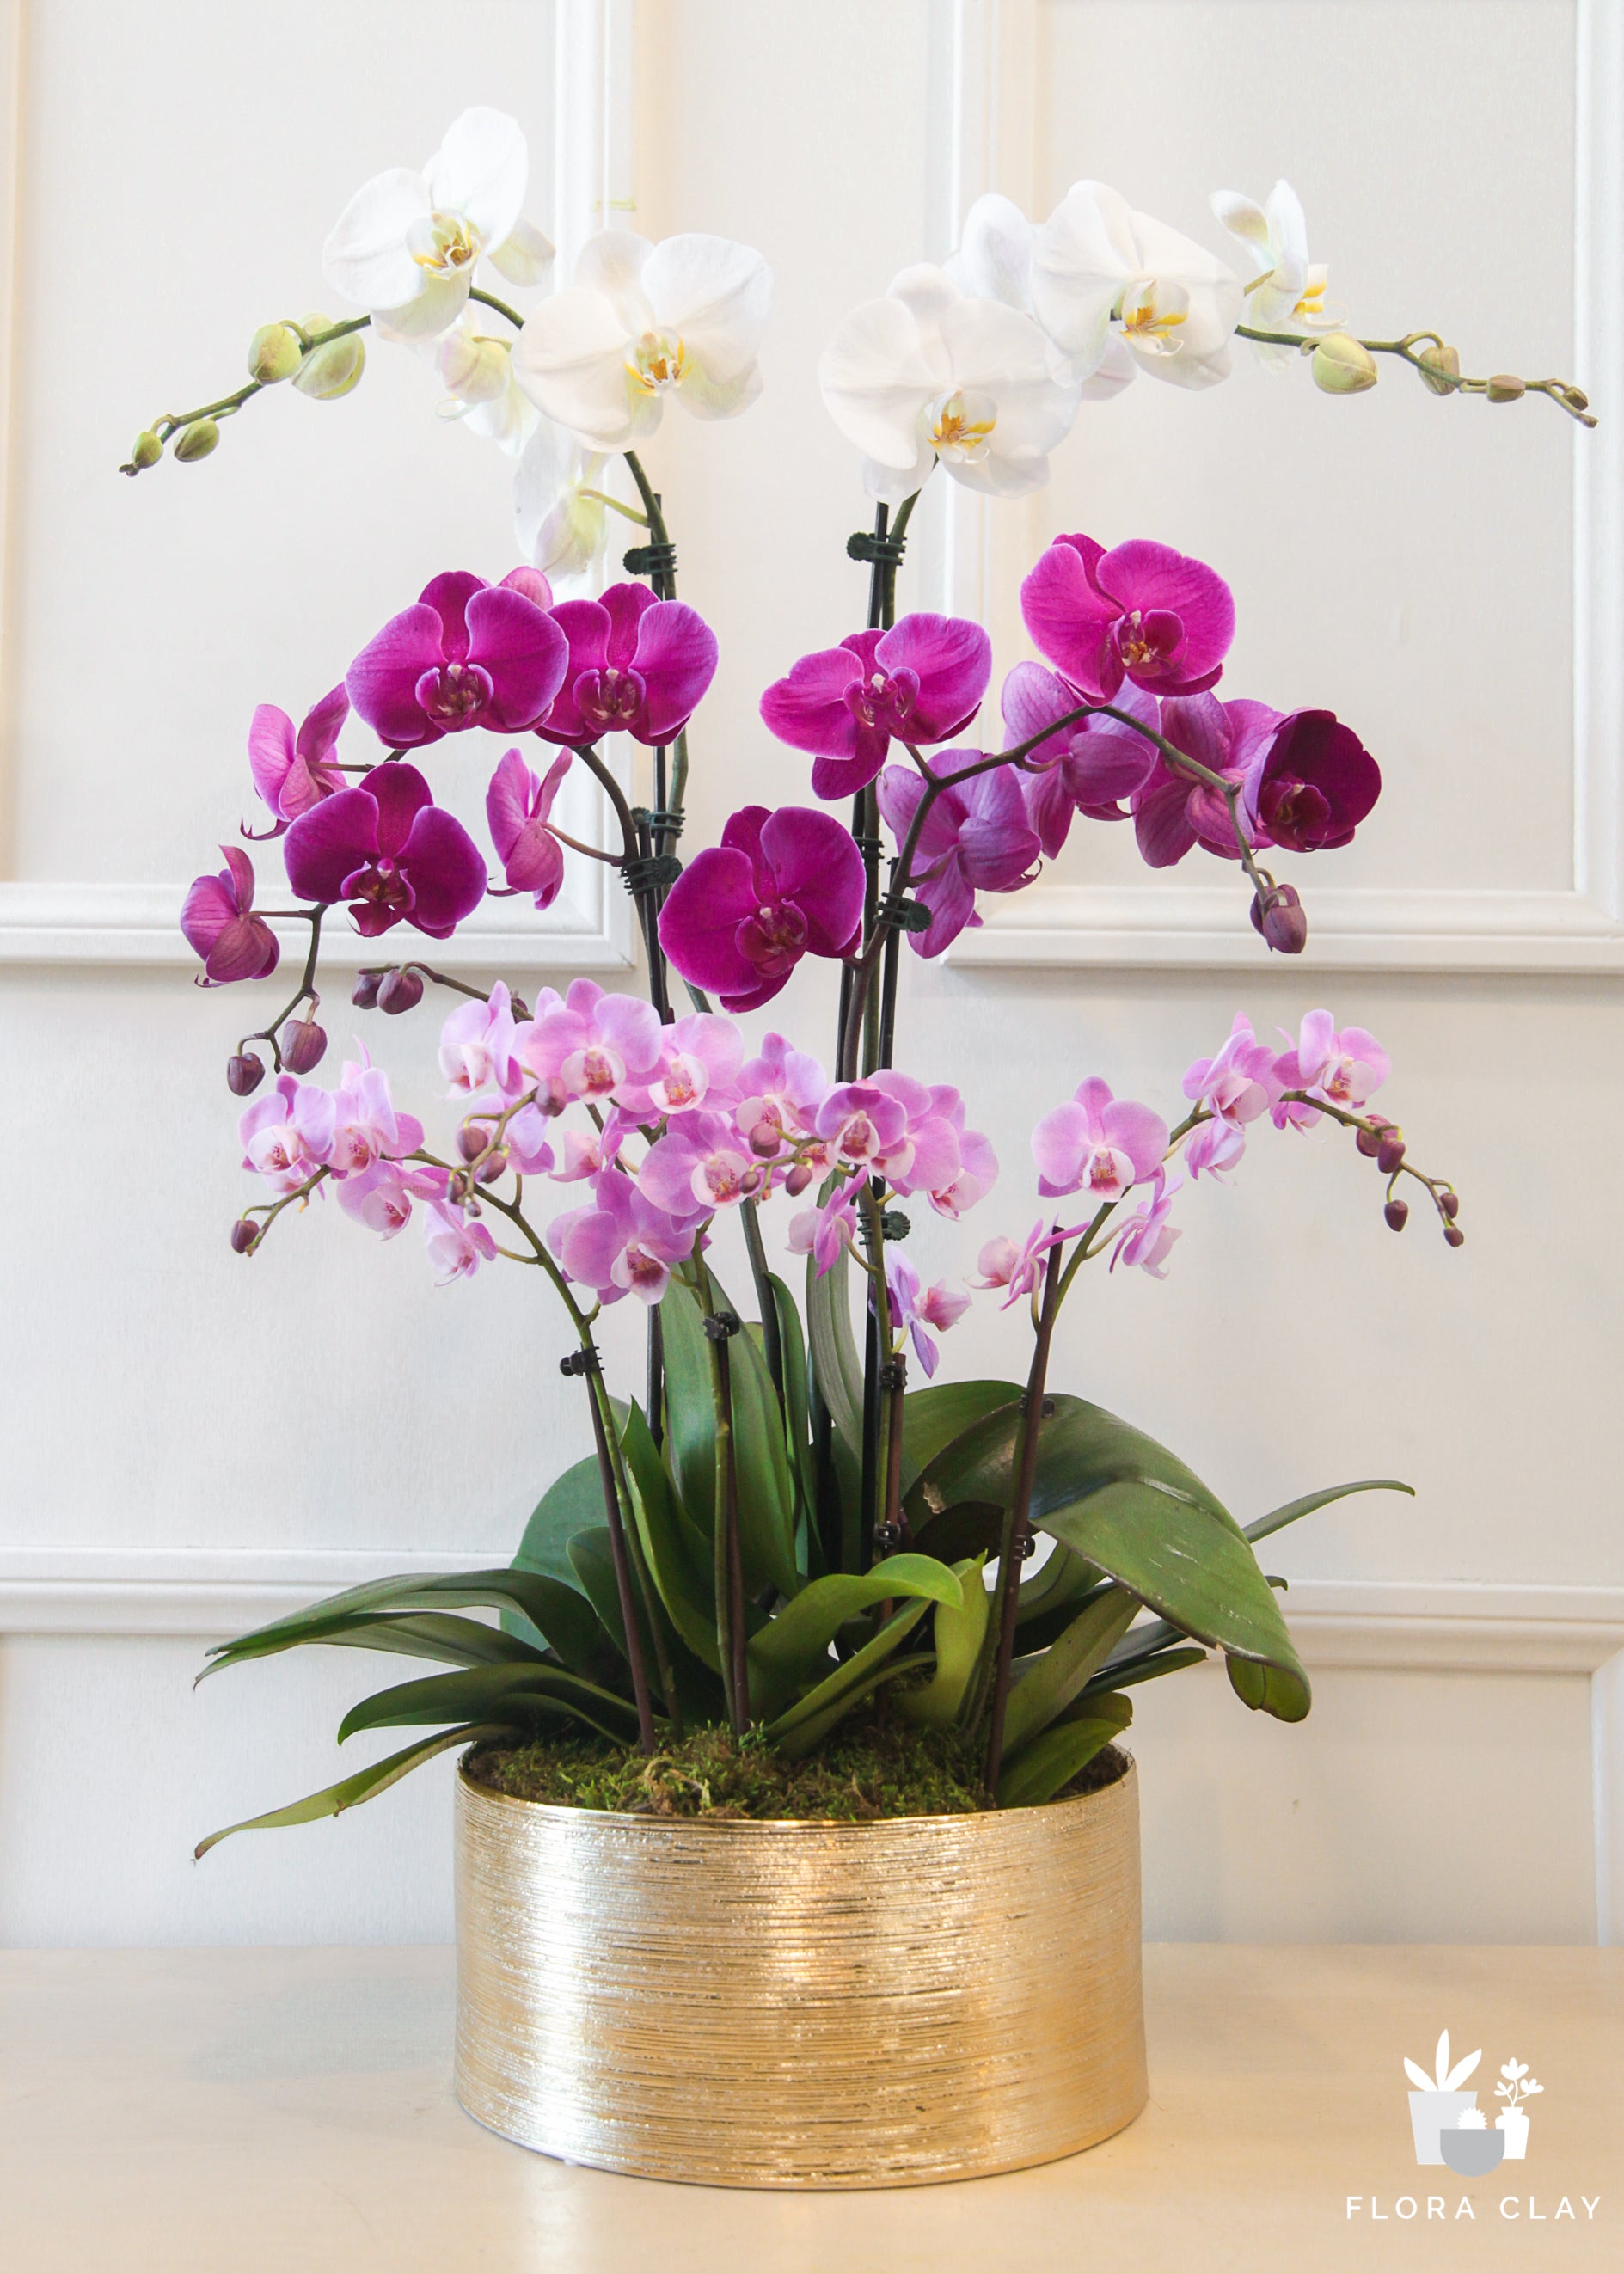 classy-orchid-arrangement-renewed-floraclay-4.jpg